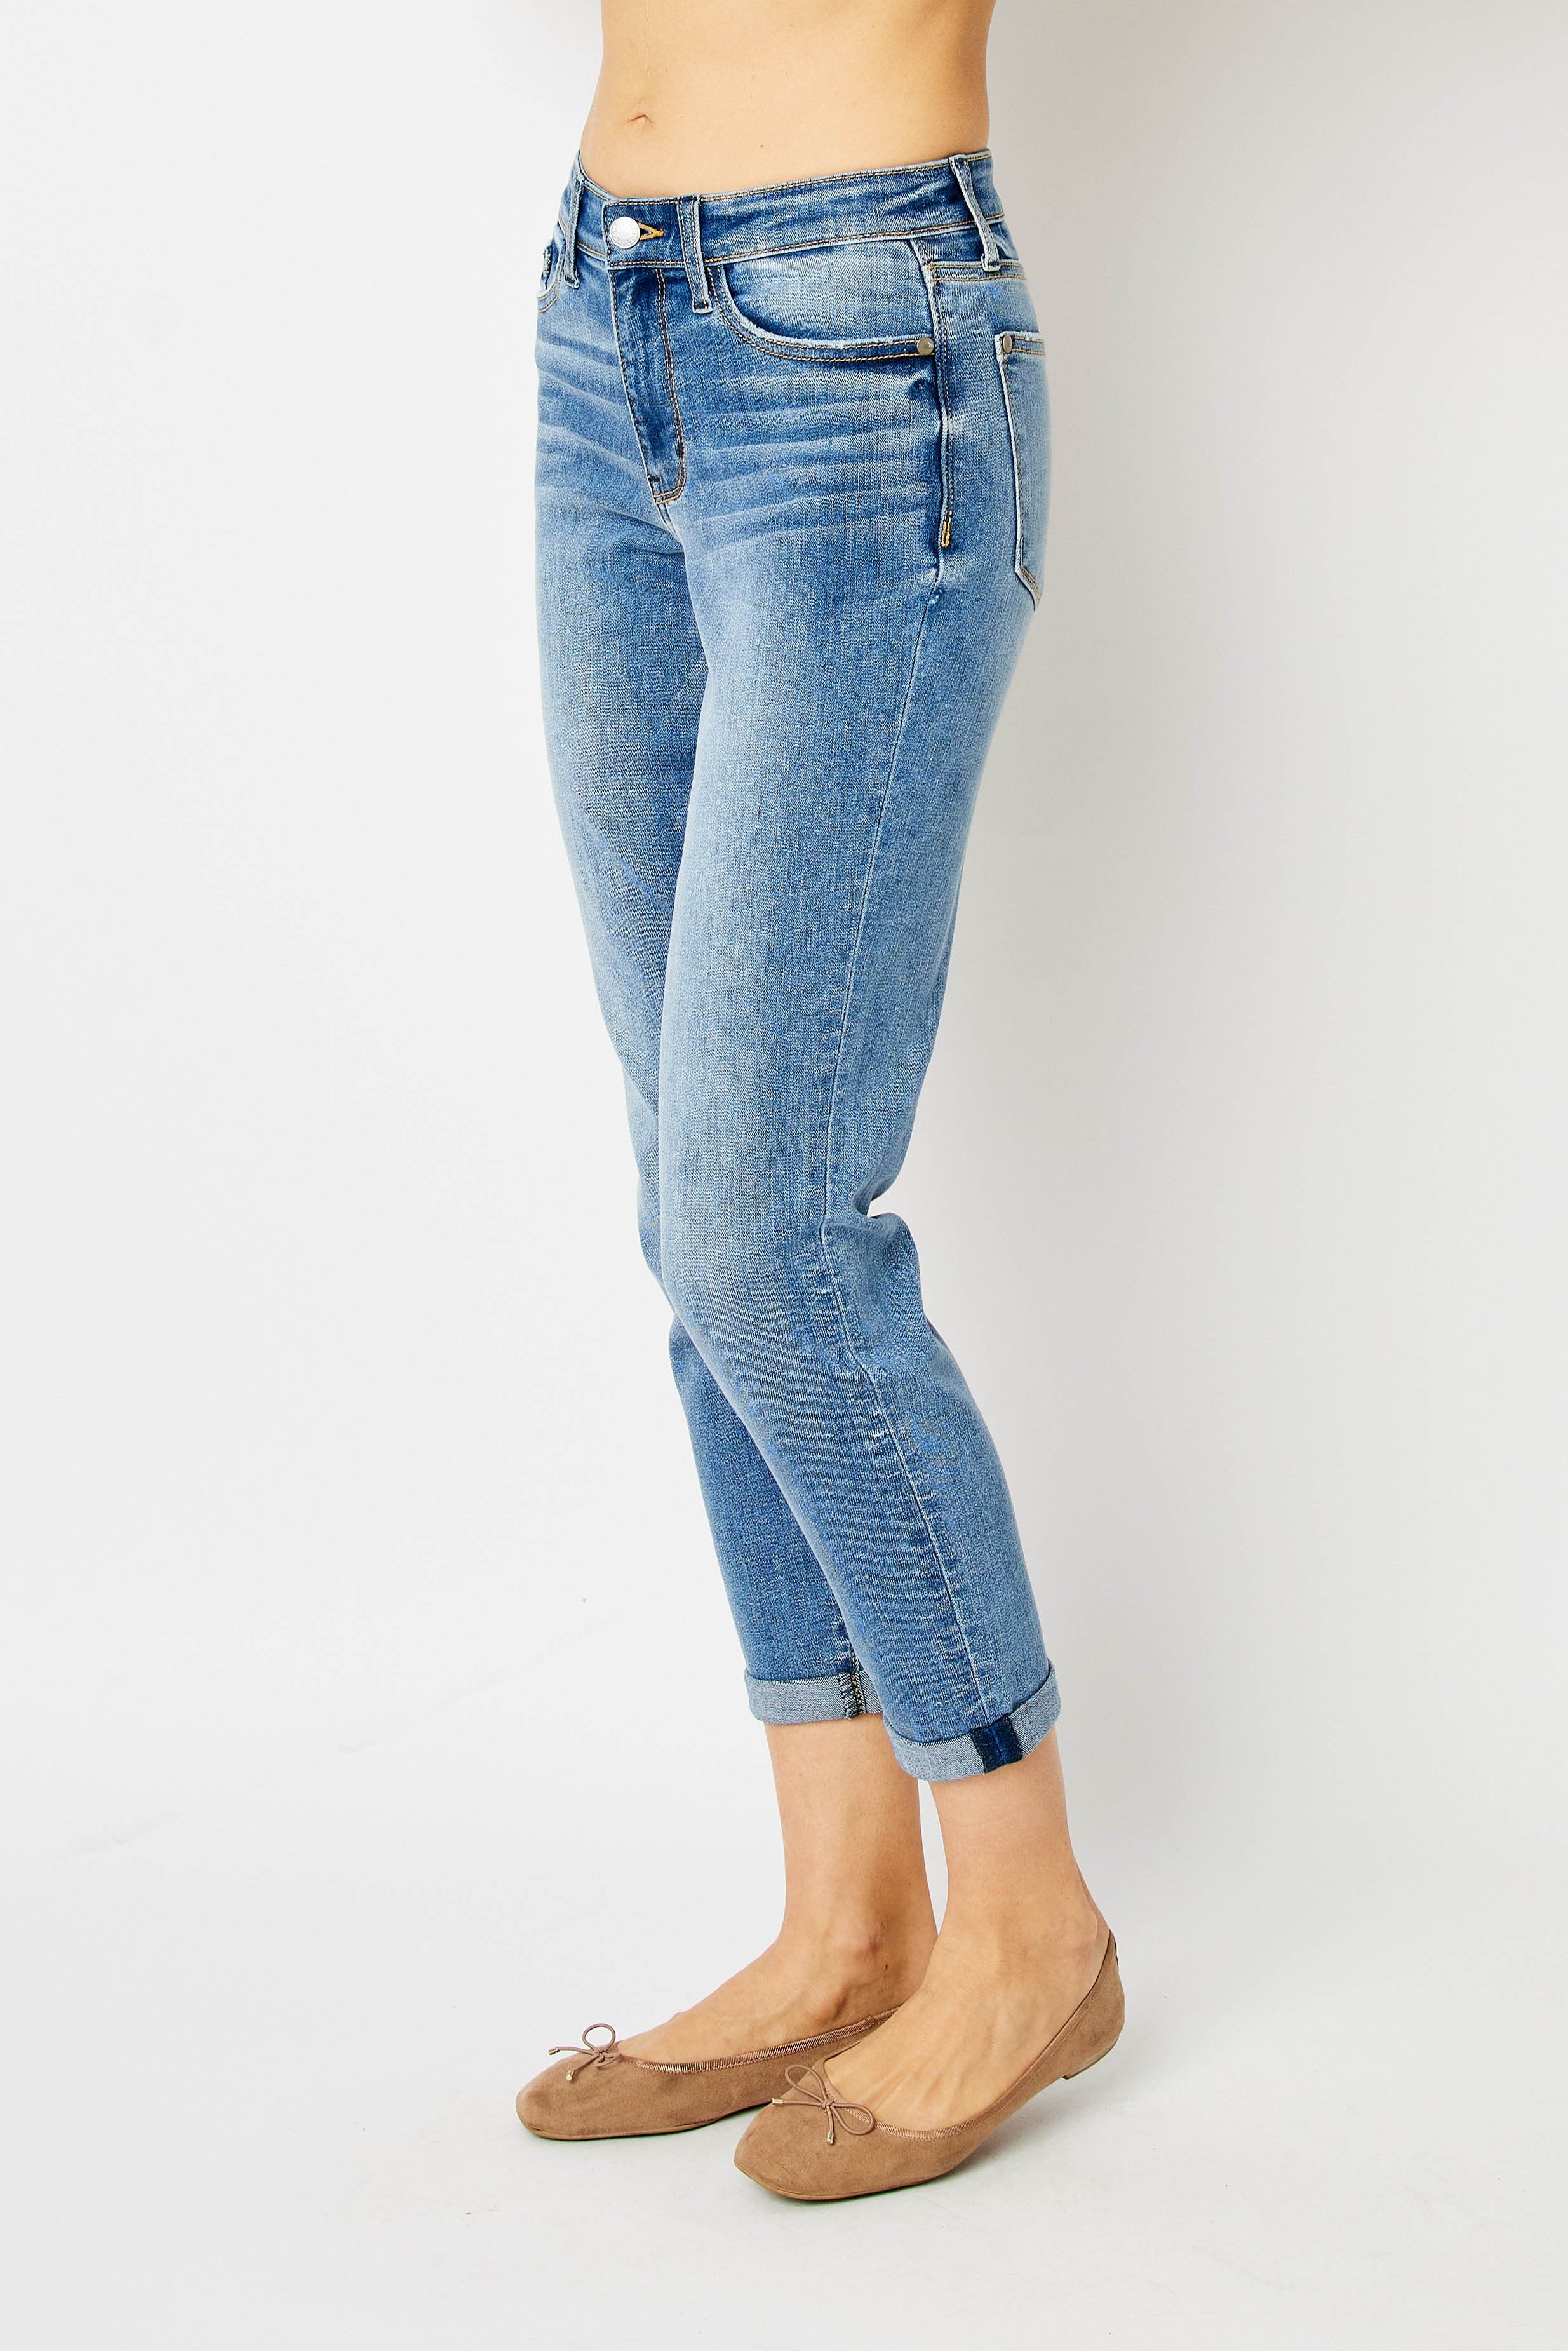 Judy Blue Fellowship Midrise Slim Jeans (82441)